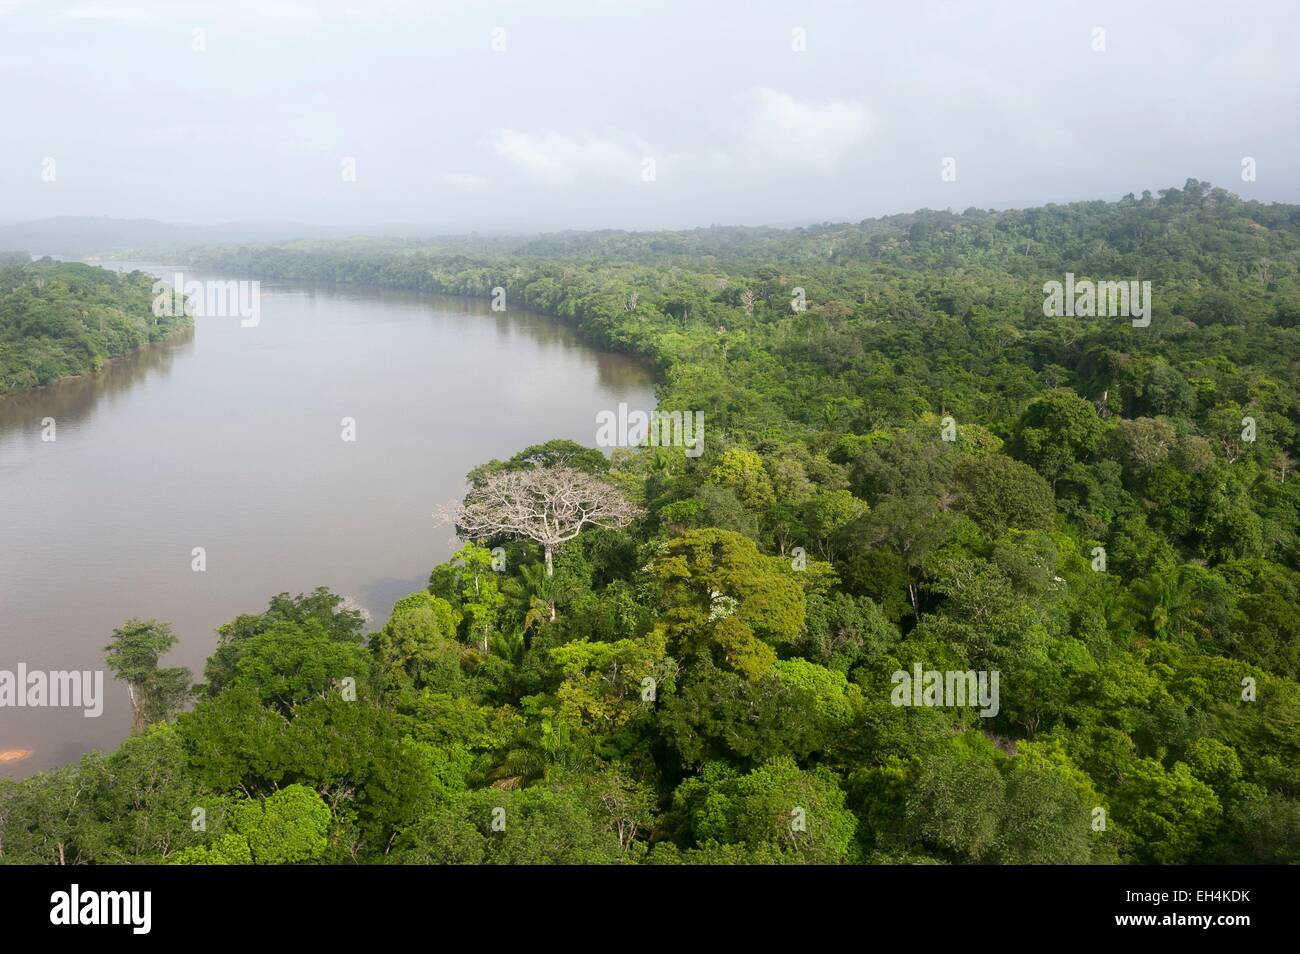 France, French Guiana, Parc Amazonien de Guyane (Guiana Amazonian Park), Maripasoula, Amazon rainforest, overview of the Lawa River becoming downstream the Maroni river (aerial view) Stock Photo